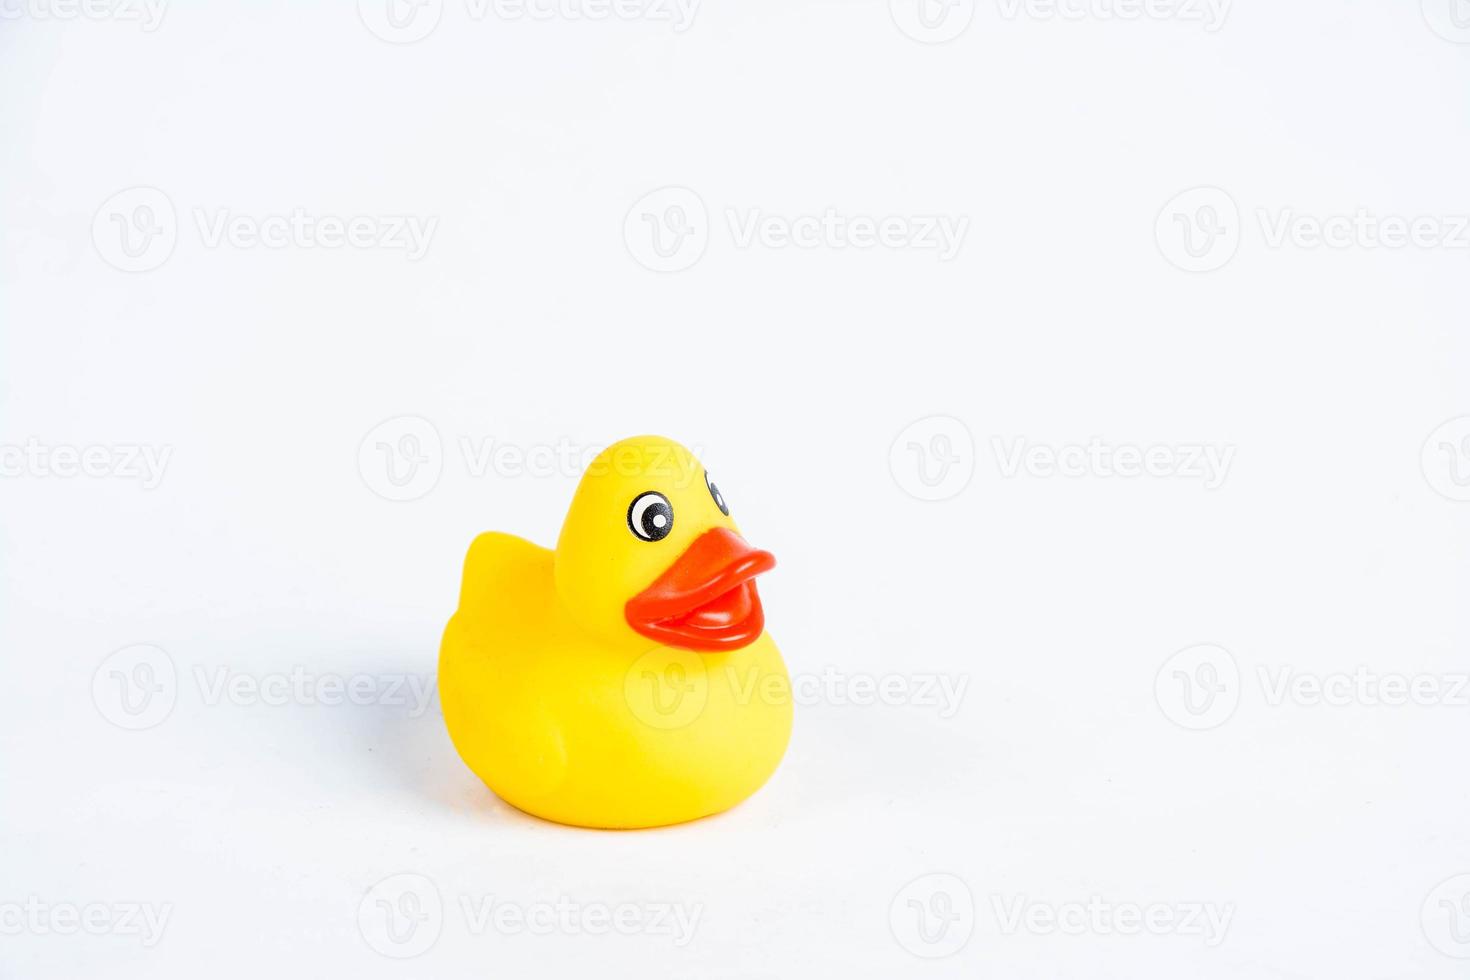 pato de baño sobre fondo blanco juguete de pato pato de goma lindo foto